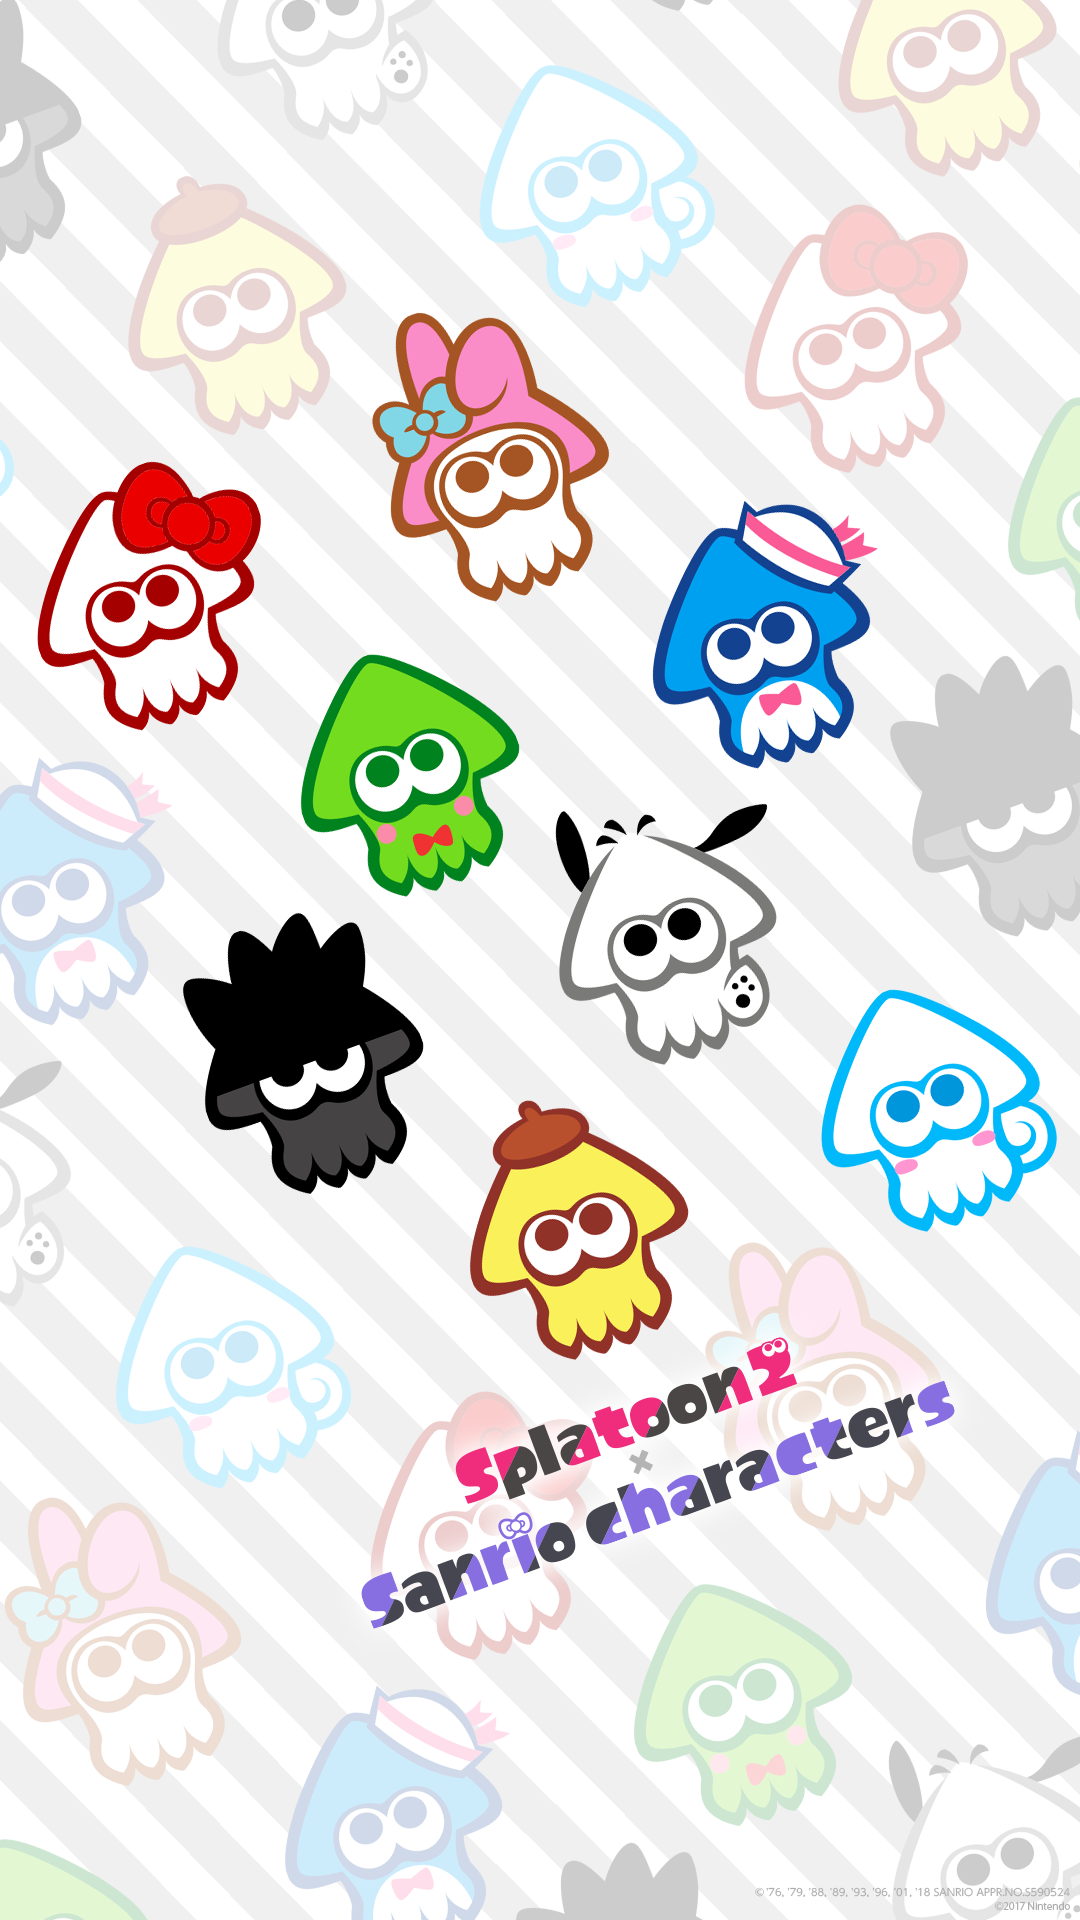 Download This Adorable Splatoon 2 Sanrio Characters Wallpaper – NintendoSoup